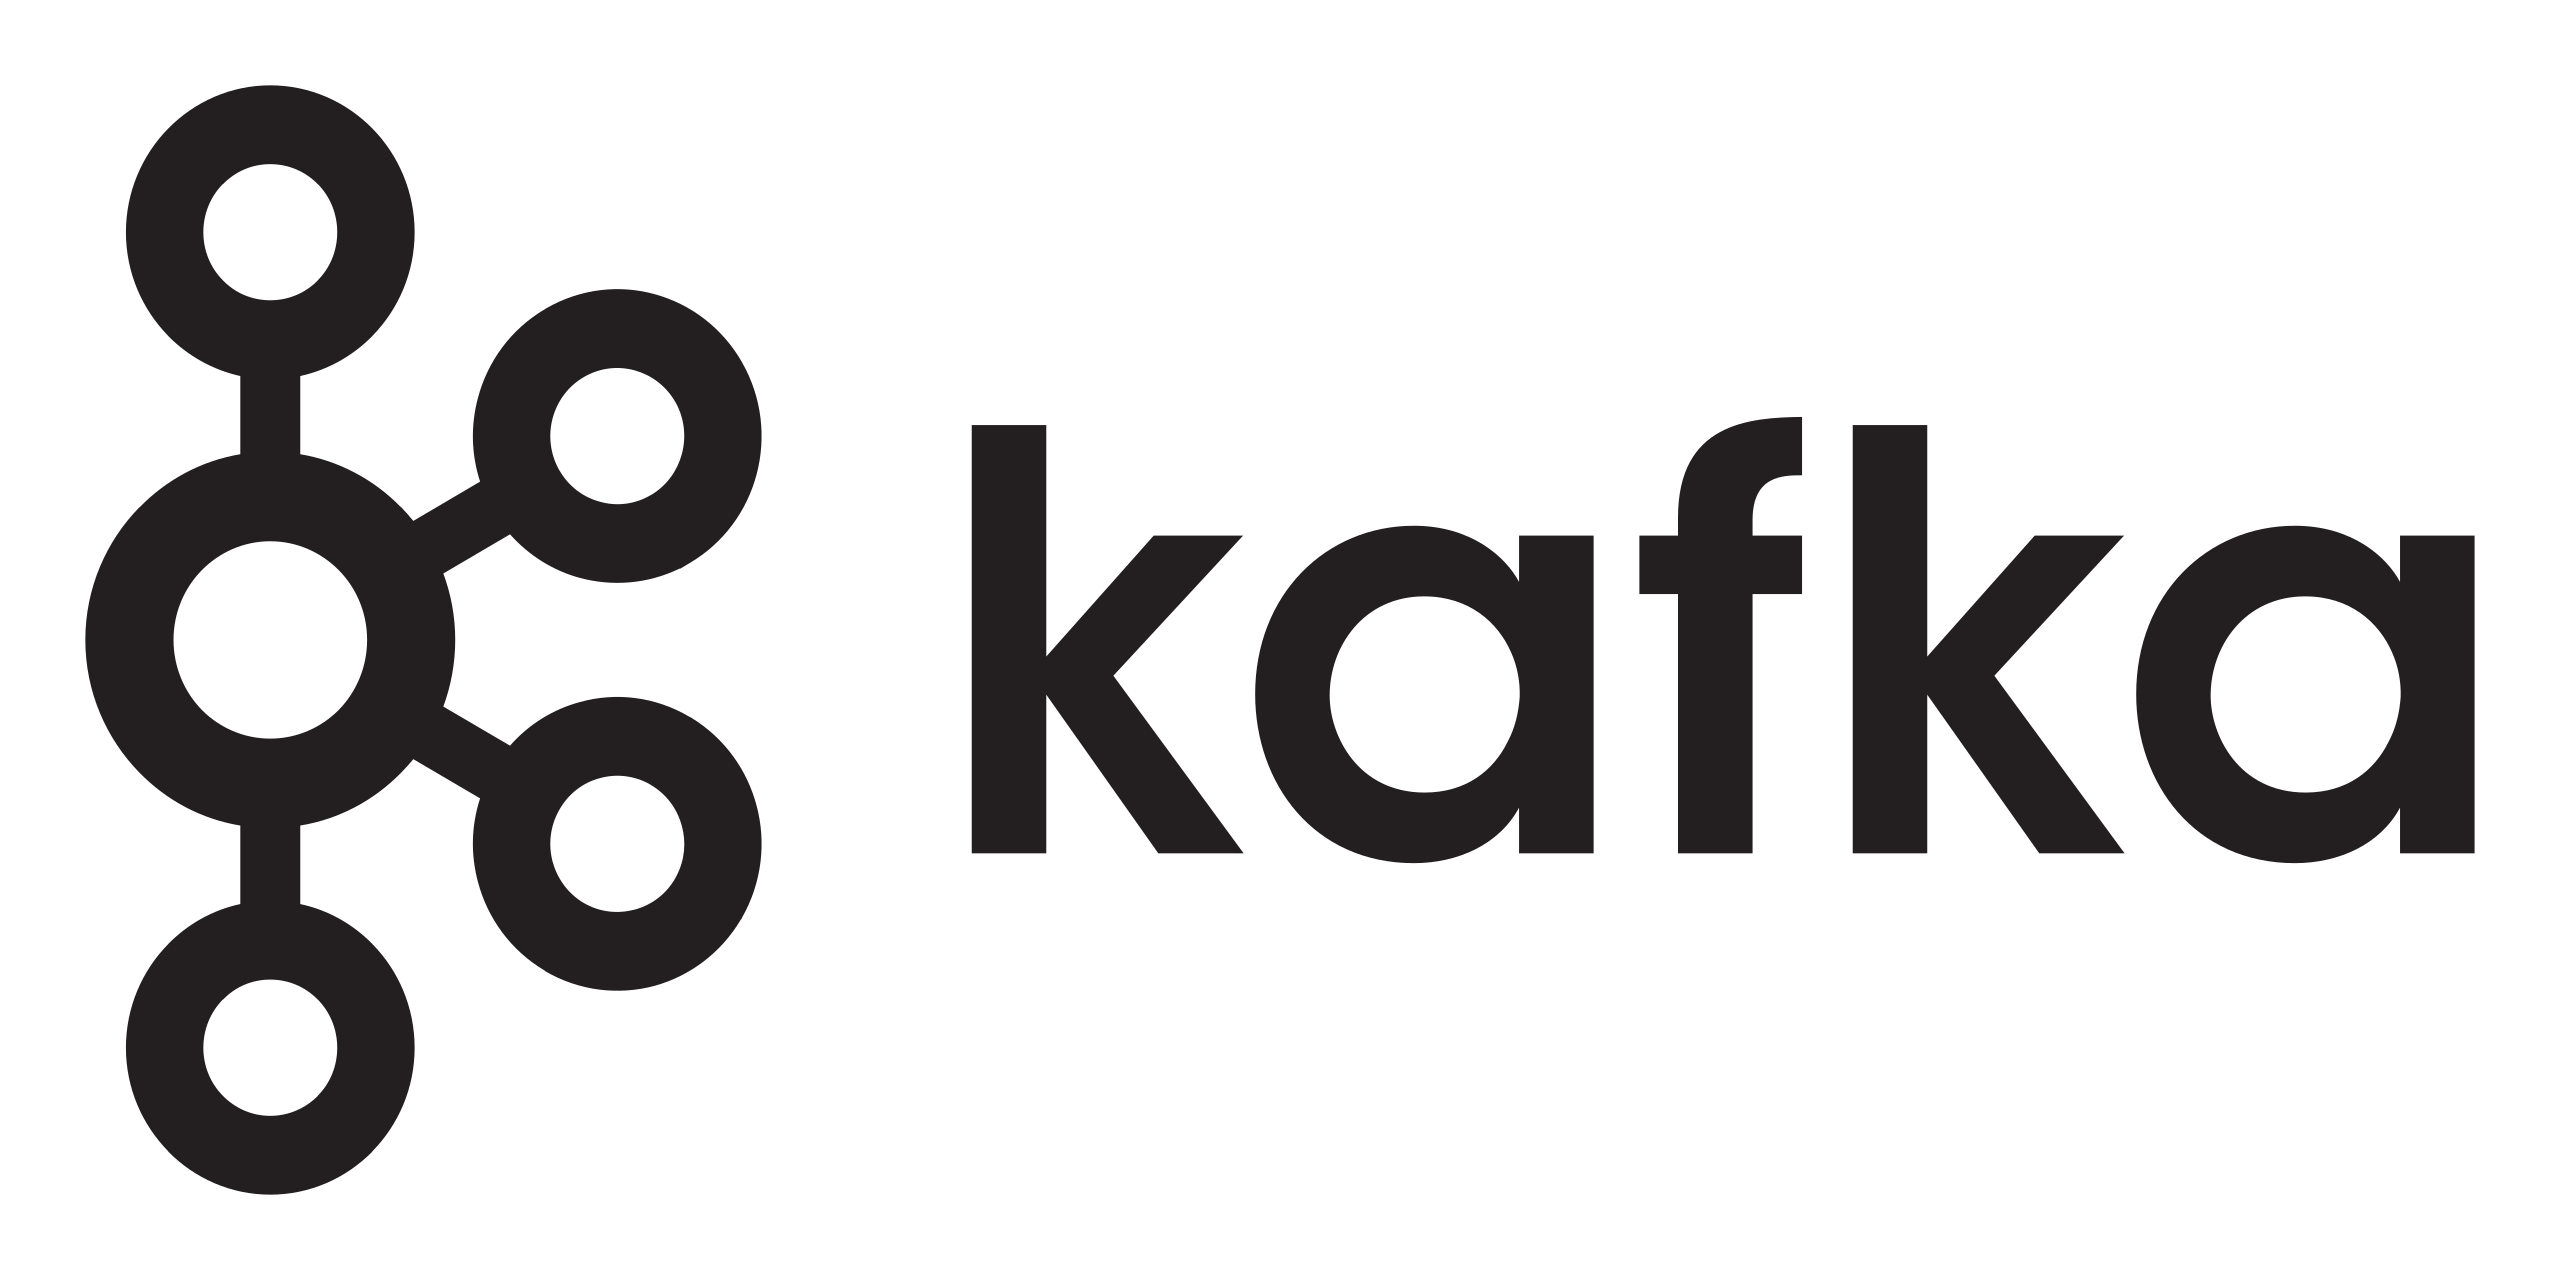 Apache Kafka Connector